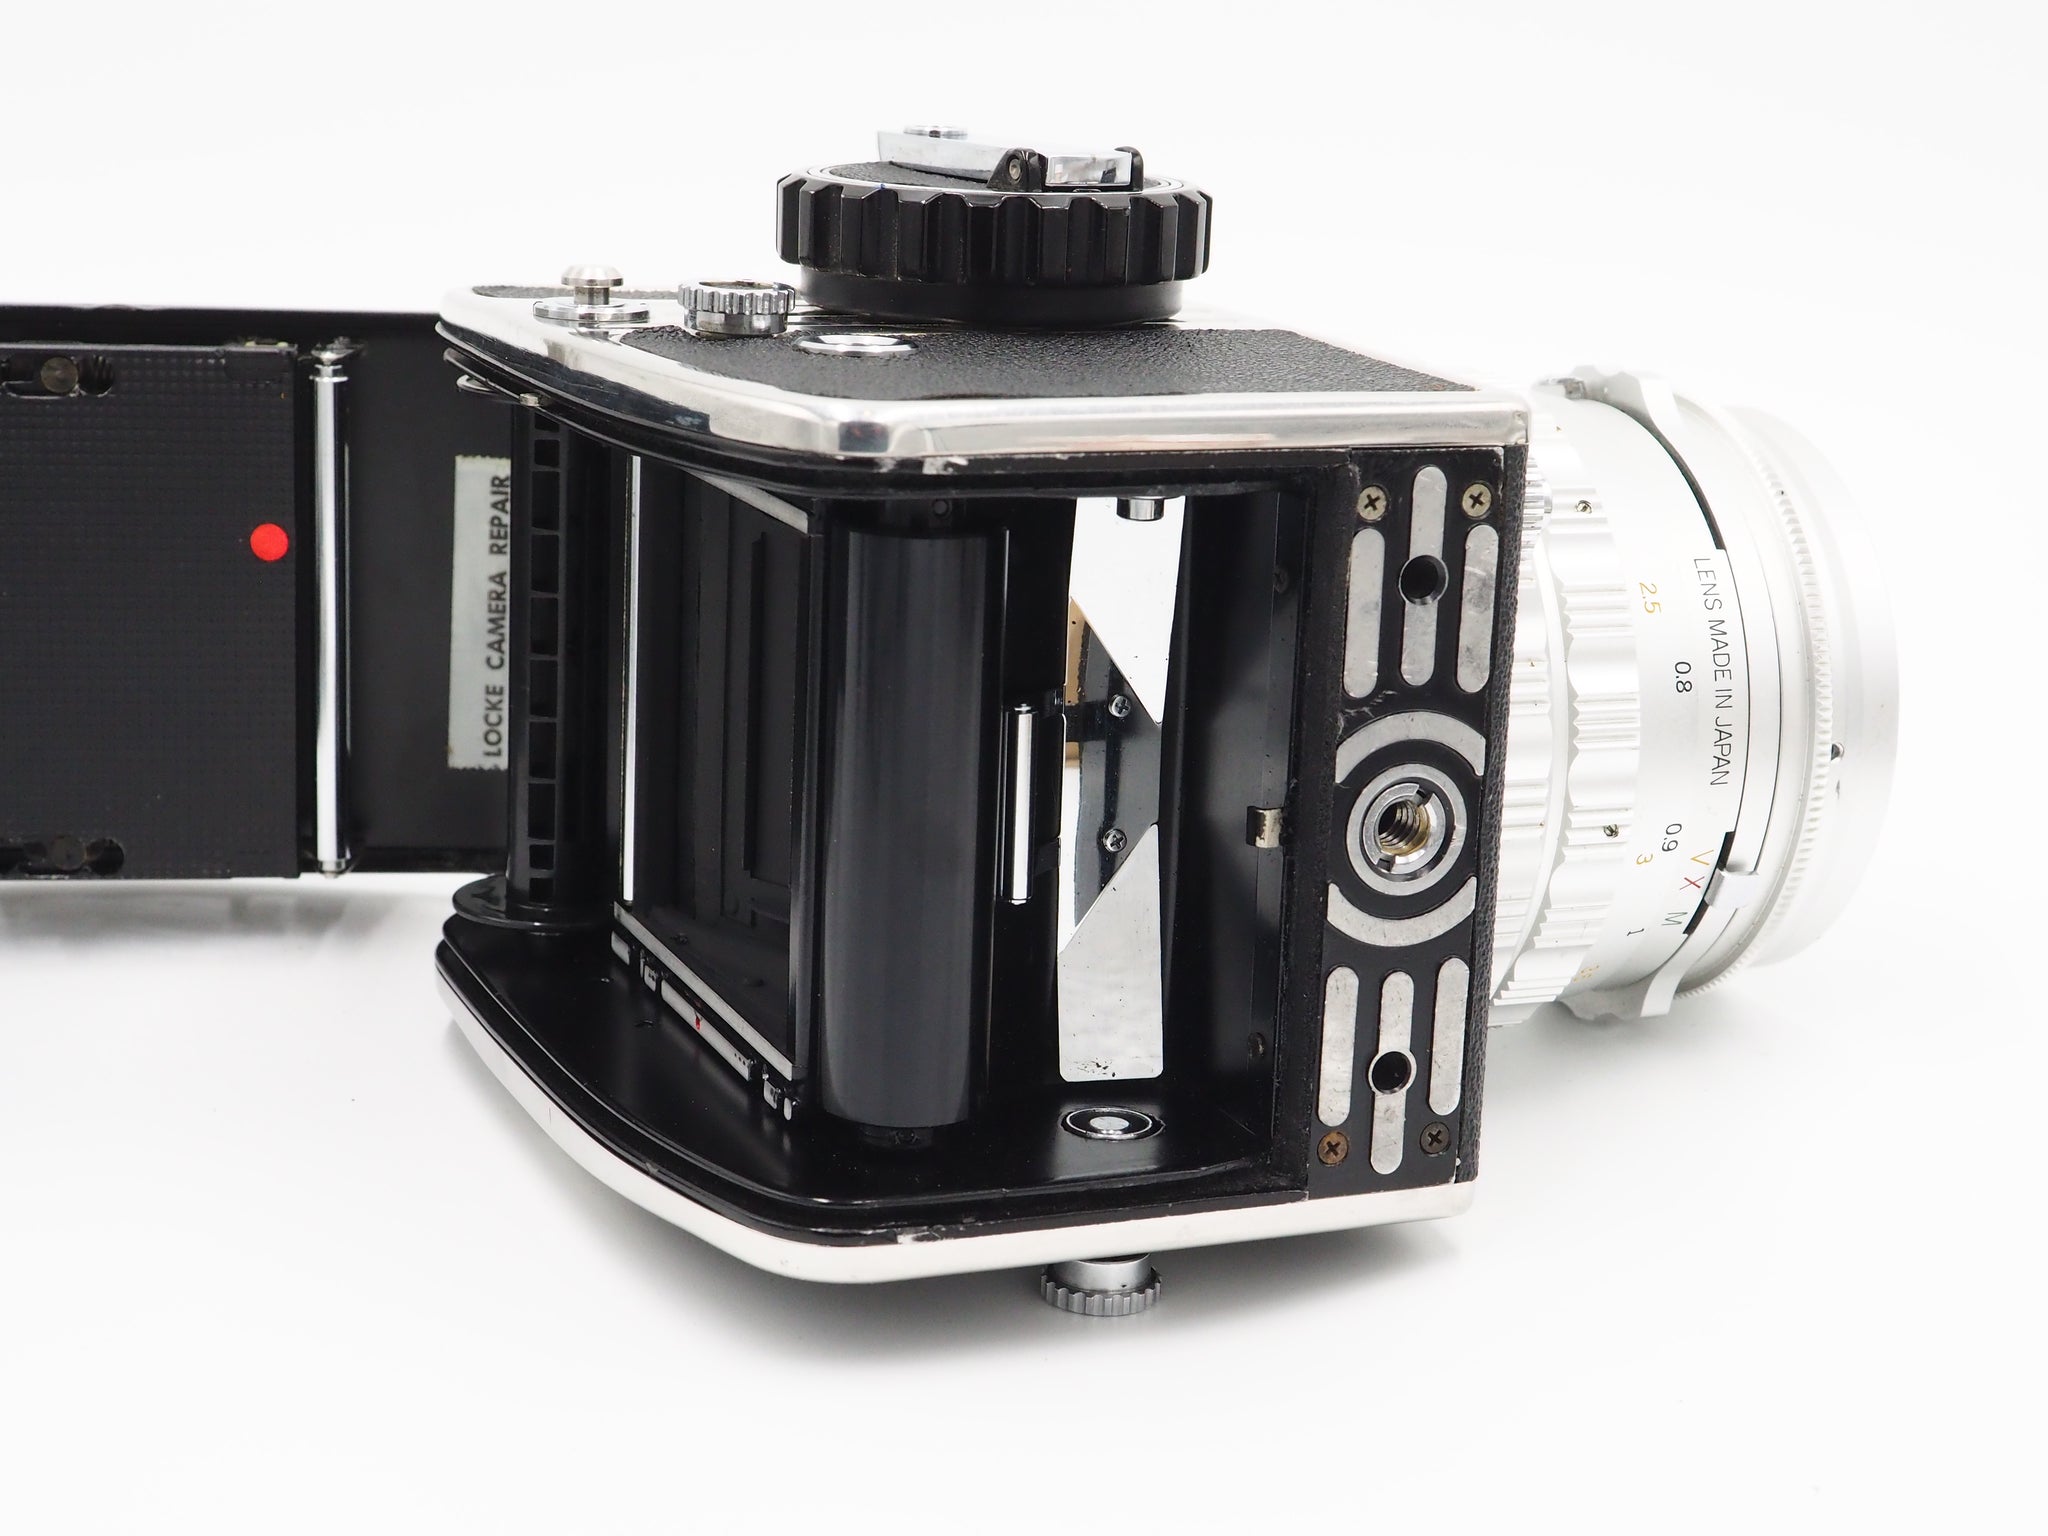 Kowa Six Medium Format Camera with 85mm f/2.8 Lens - USED – Austin